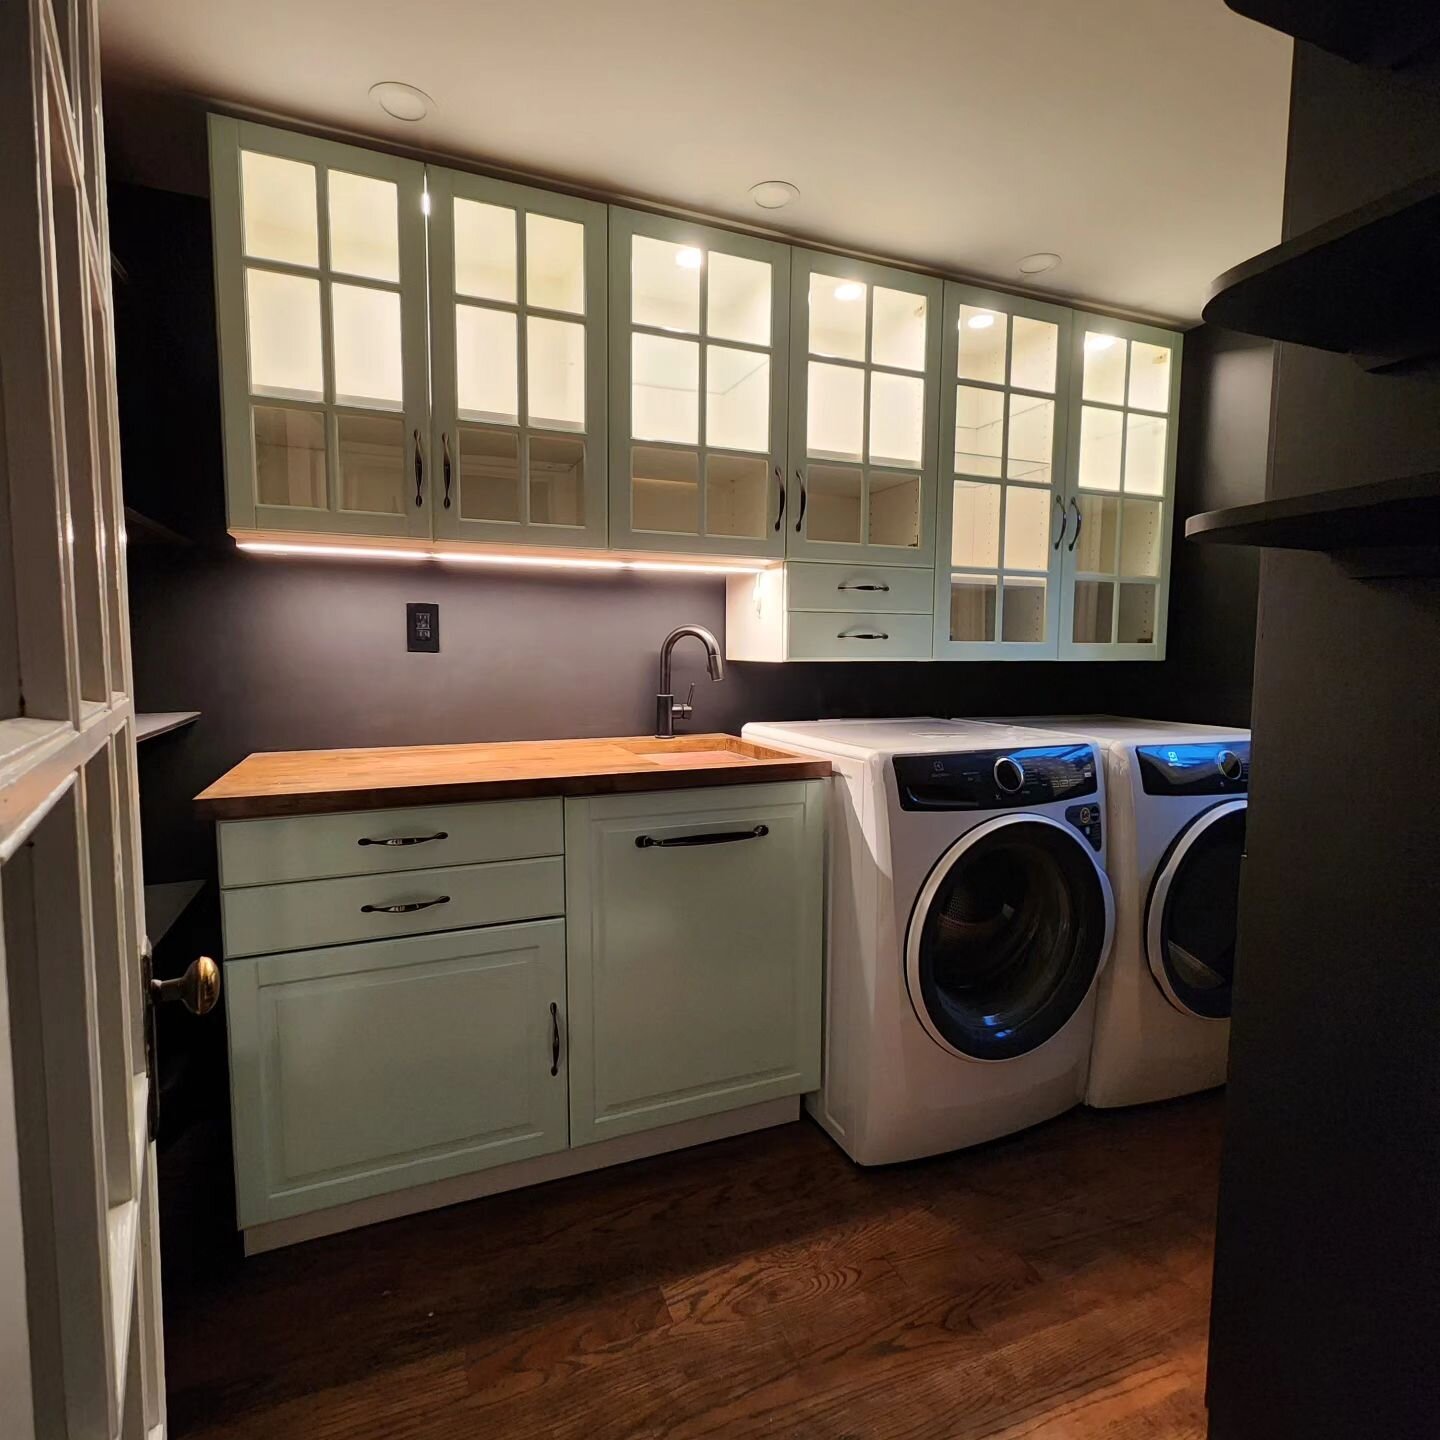 Laundry room built-ins for our client in Carroll Gardens. Ever-evolving 😄
.
..
...
#builtin #laundryroom #homedesign #interiordesign #interiorinspo #customcabinets #custommillwork #cabinetdesign #cabinetinspo #fall #love #lightingdesign #ikea #brook